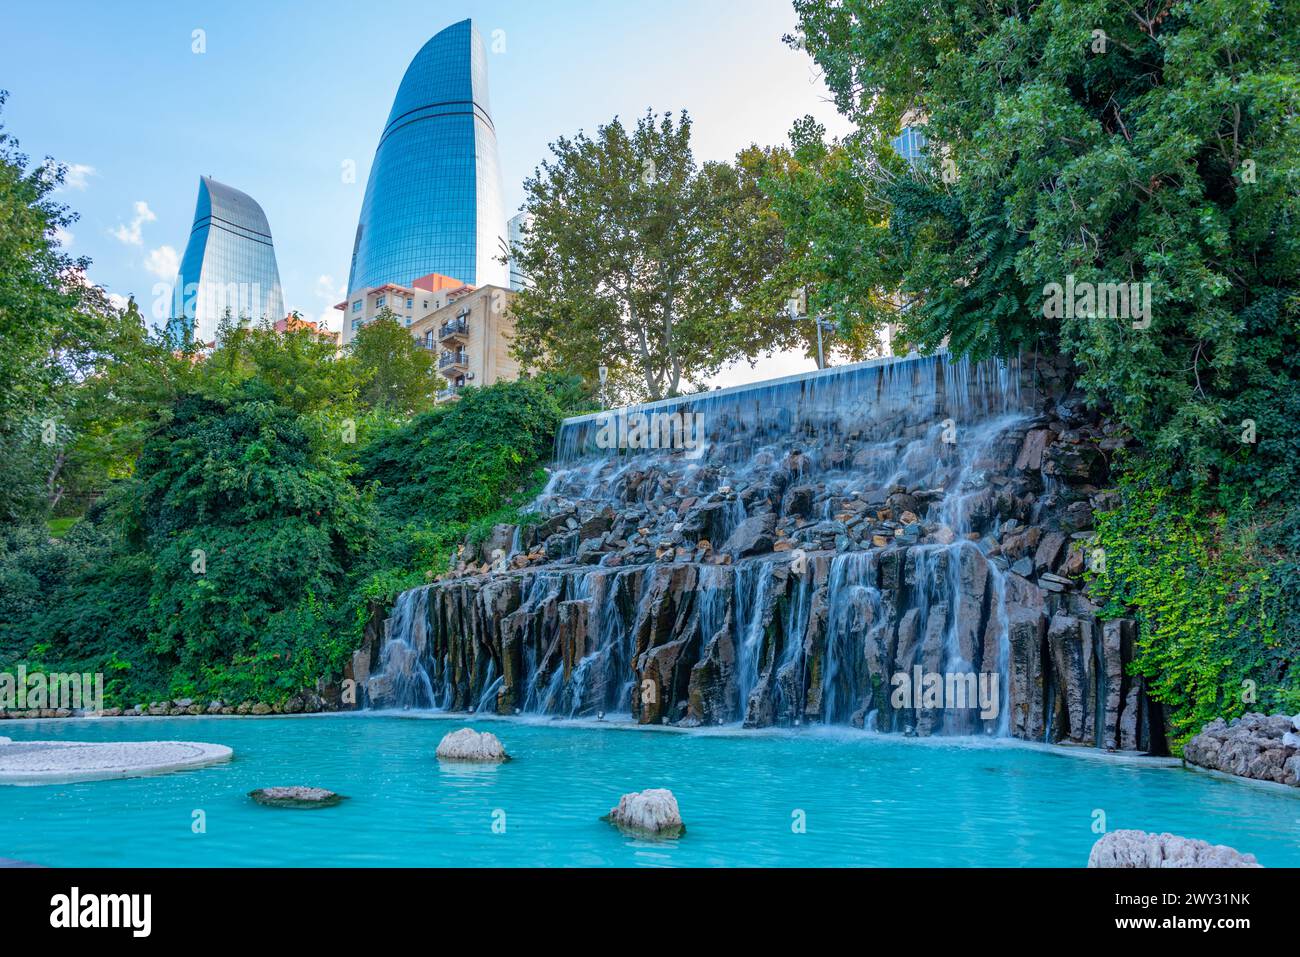 Flame towers viewed behind waterfall at selale park in Baku, Azerbaijan Stock Photo